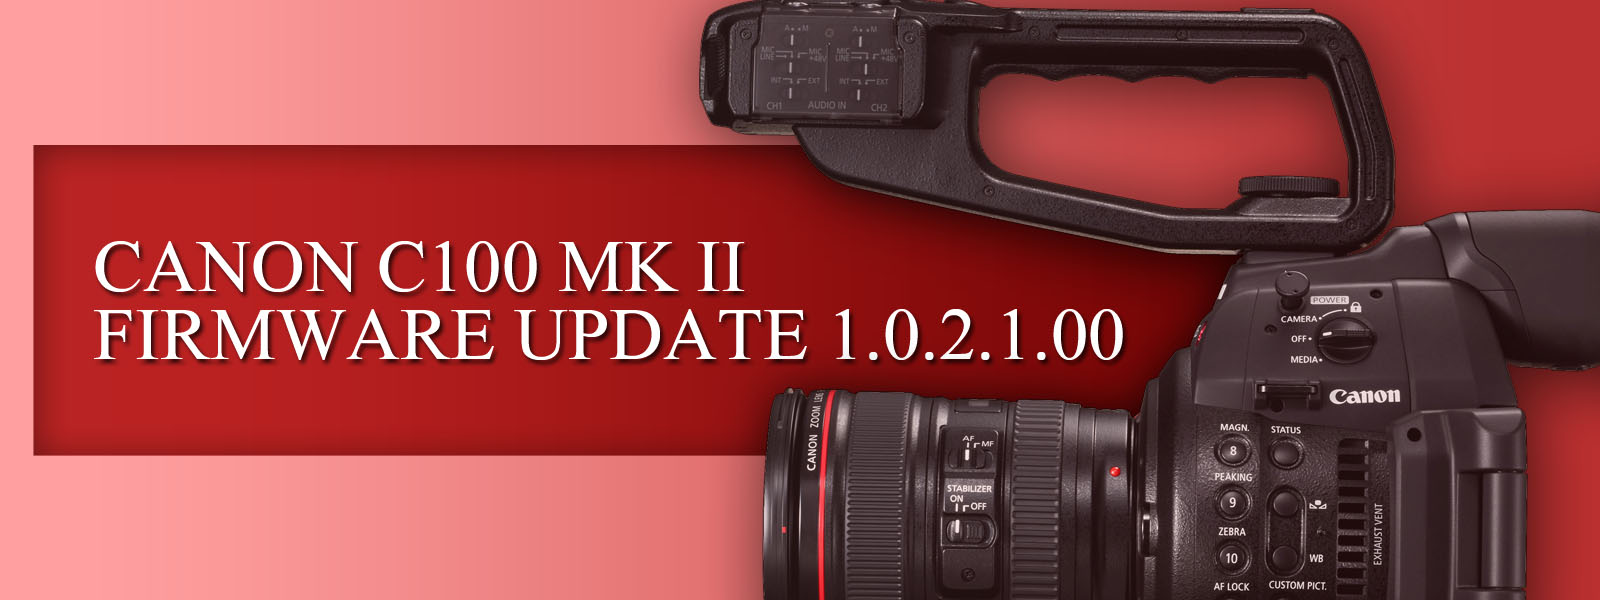 Canon EOS C100 MK II Firmware Update 1.0.2.1.00 